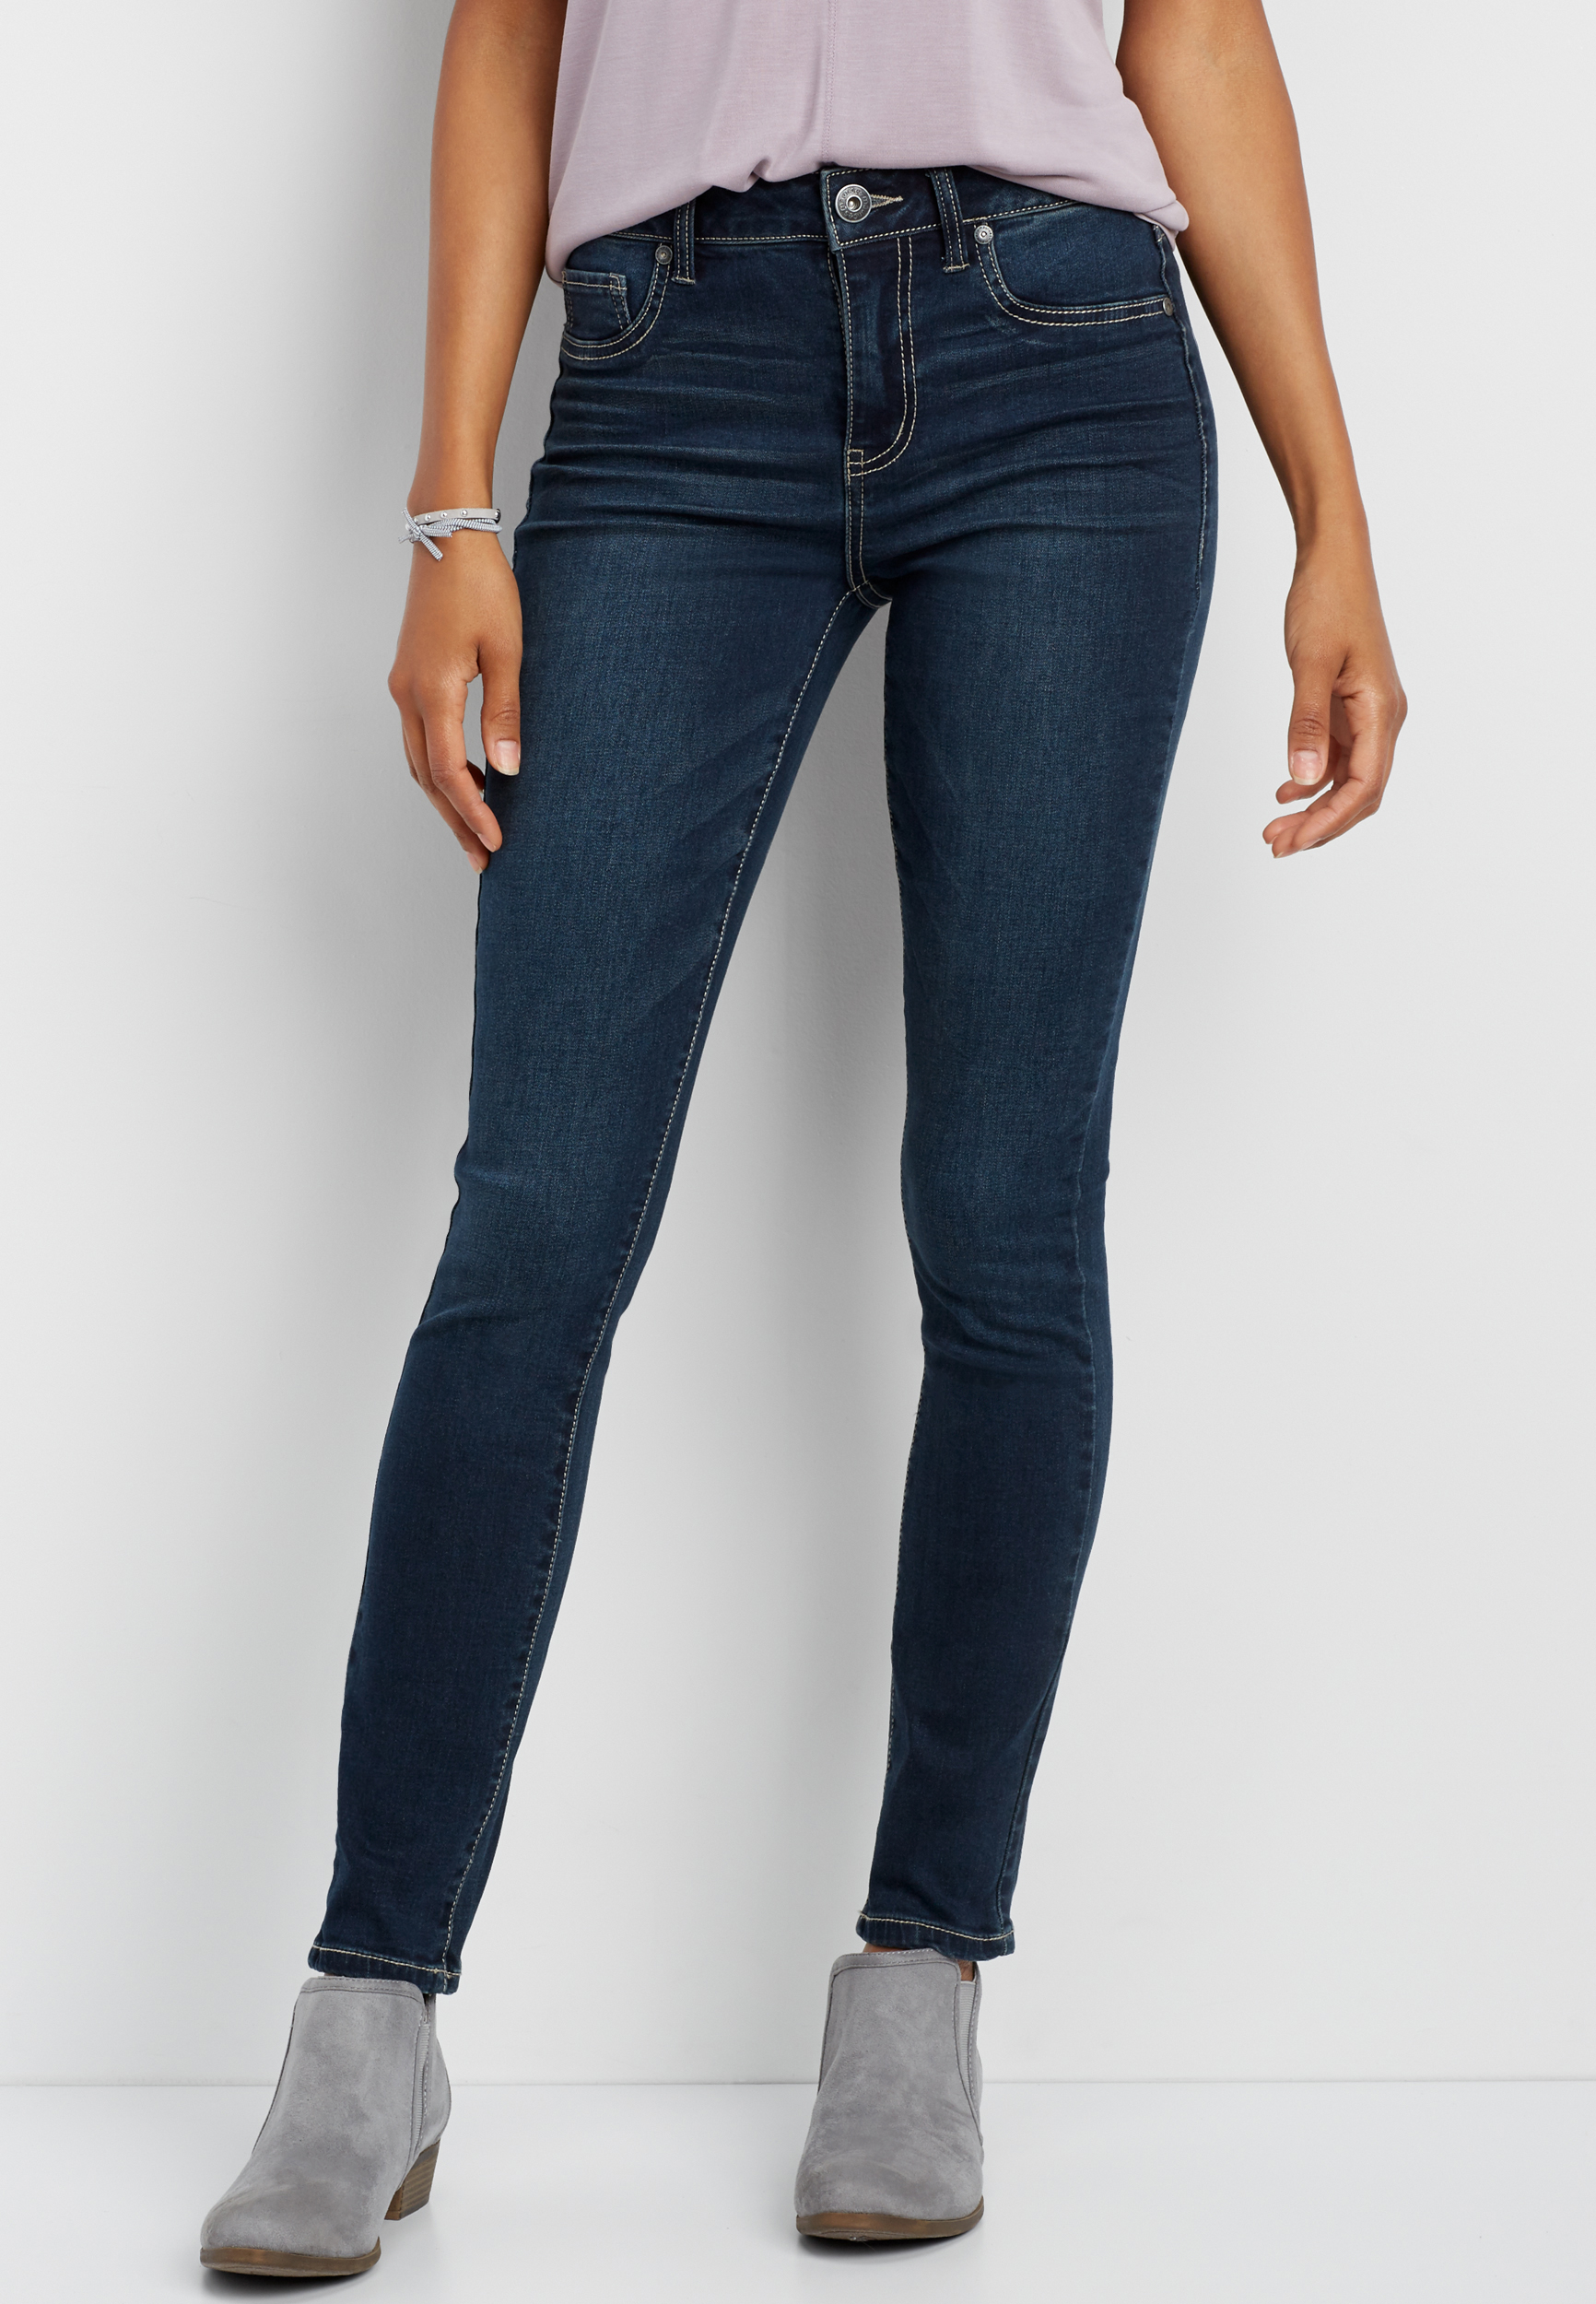 express jeans alec super skinny fit